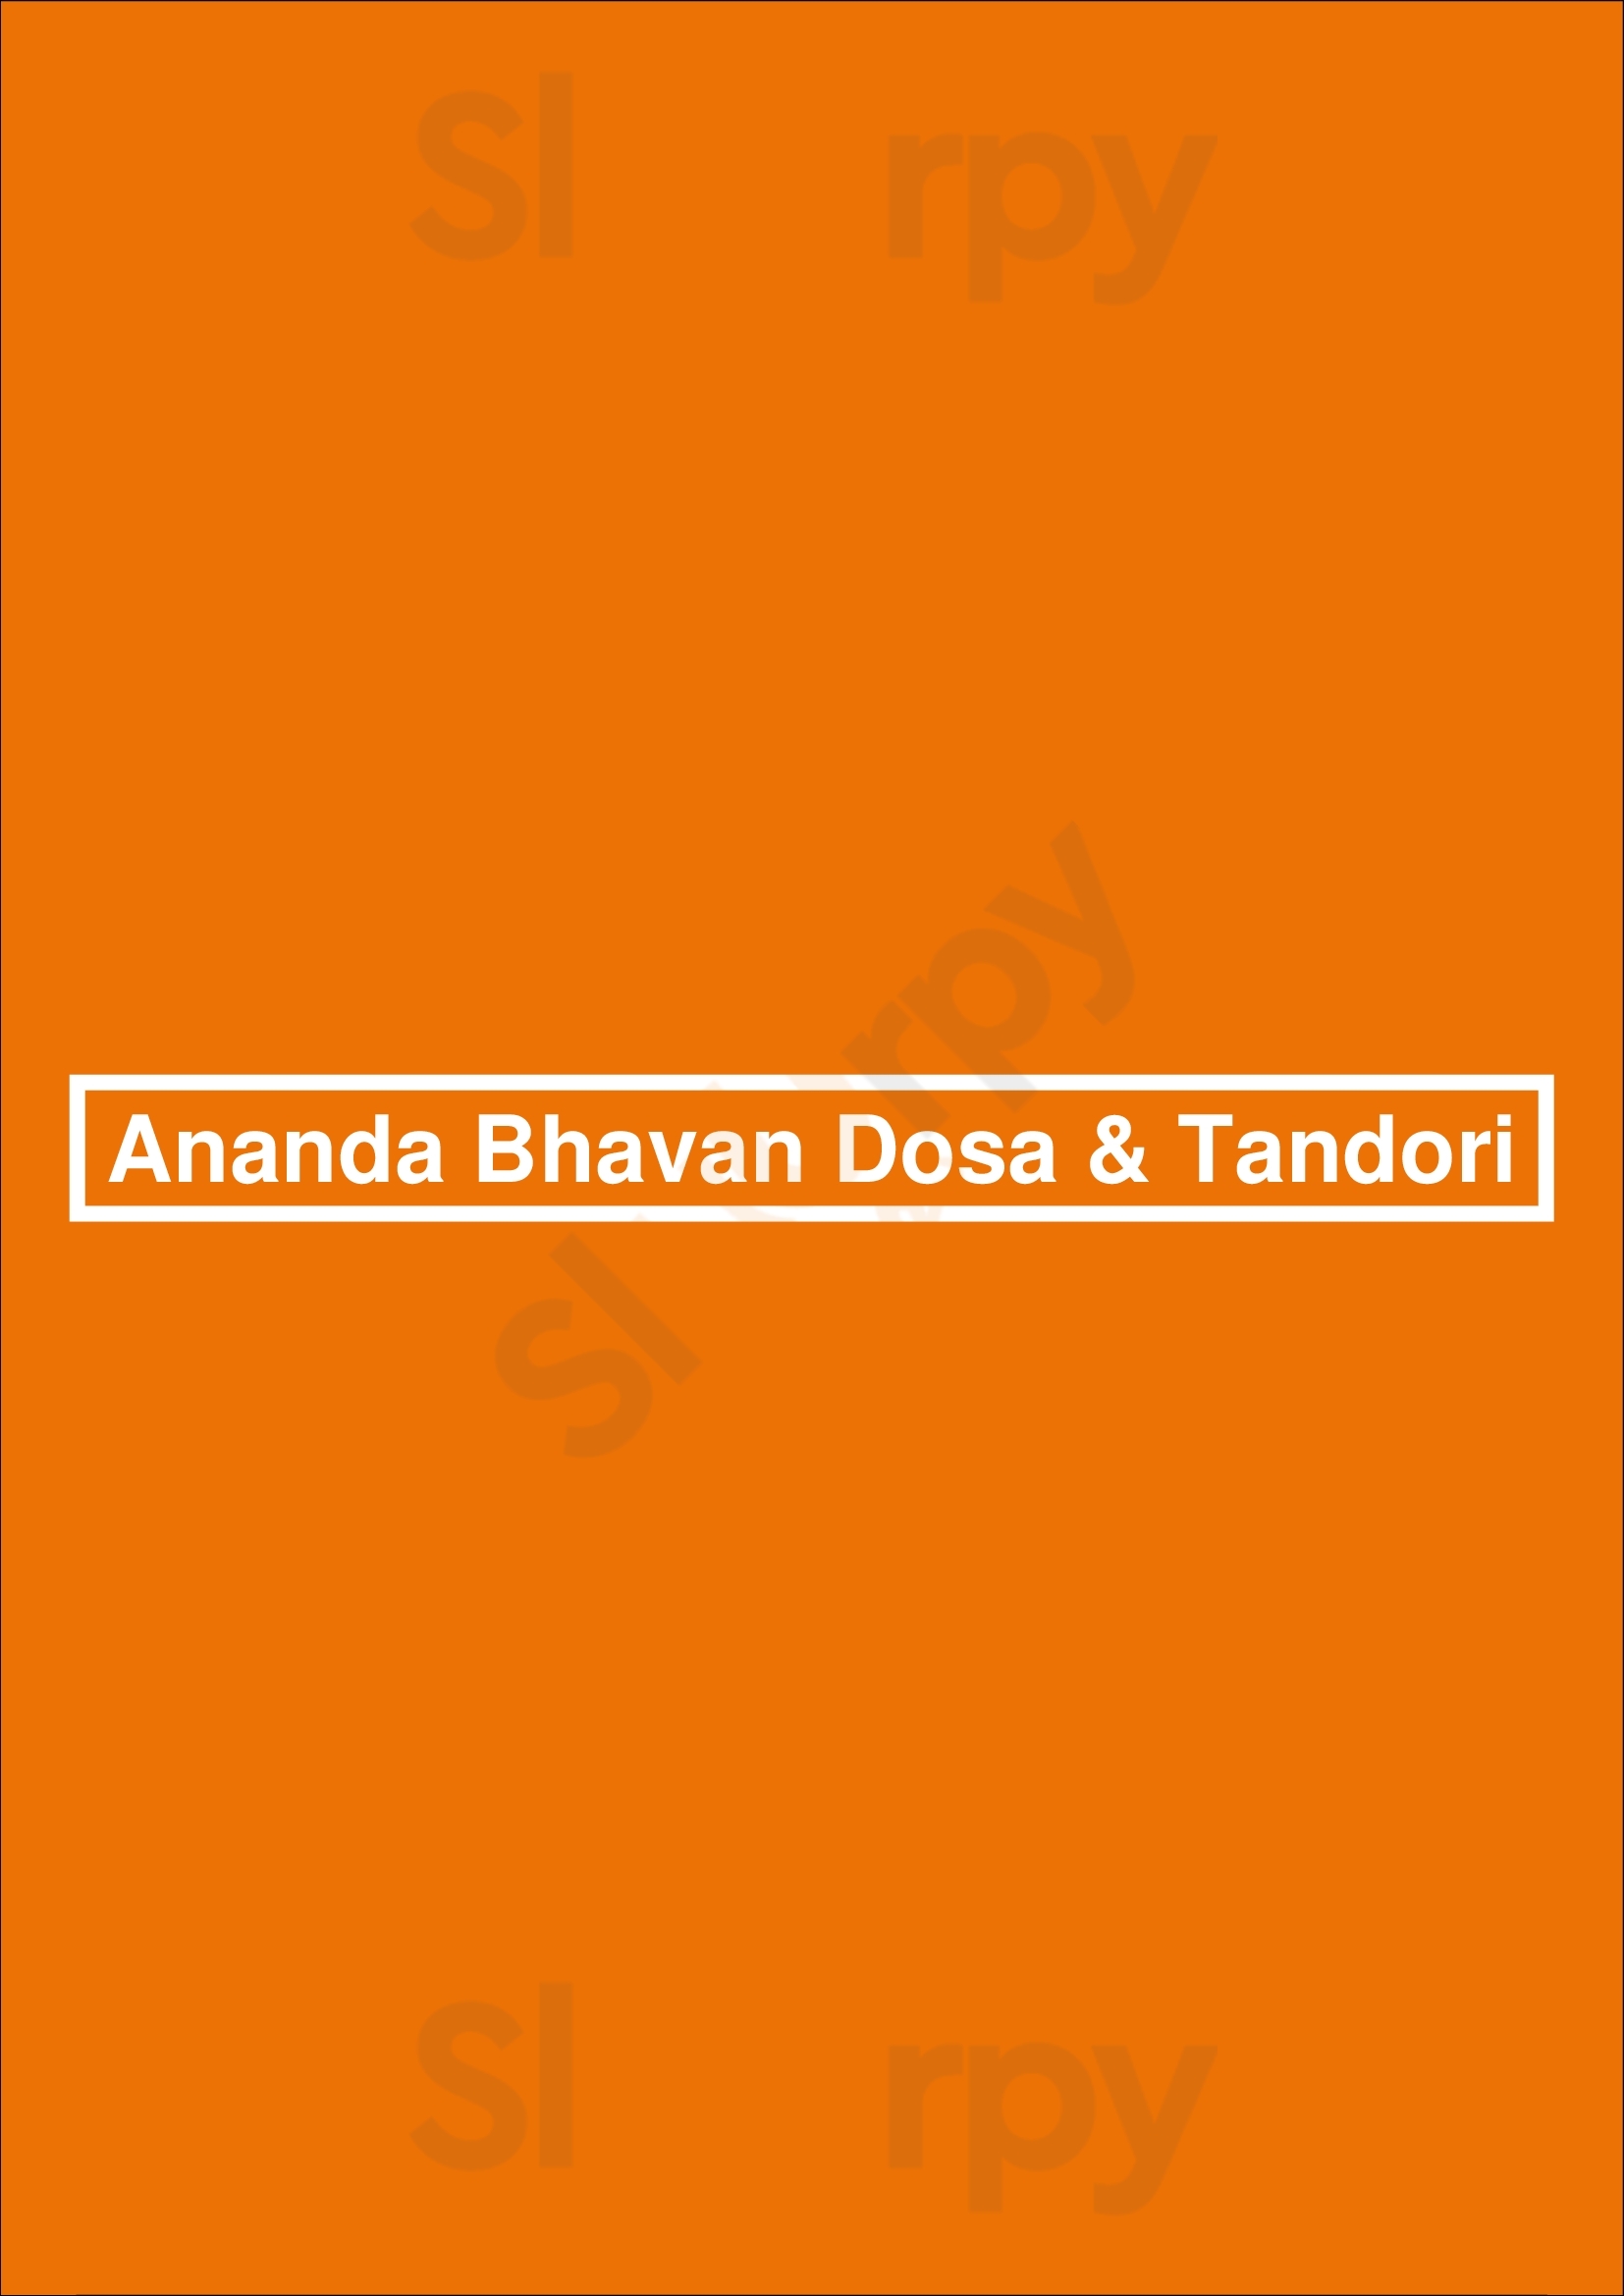 Ananda Bhavan Dosa & Tandori Vancouver Menu - 1